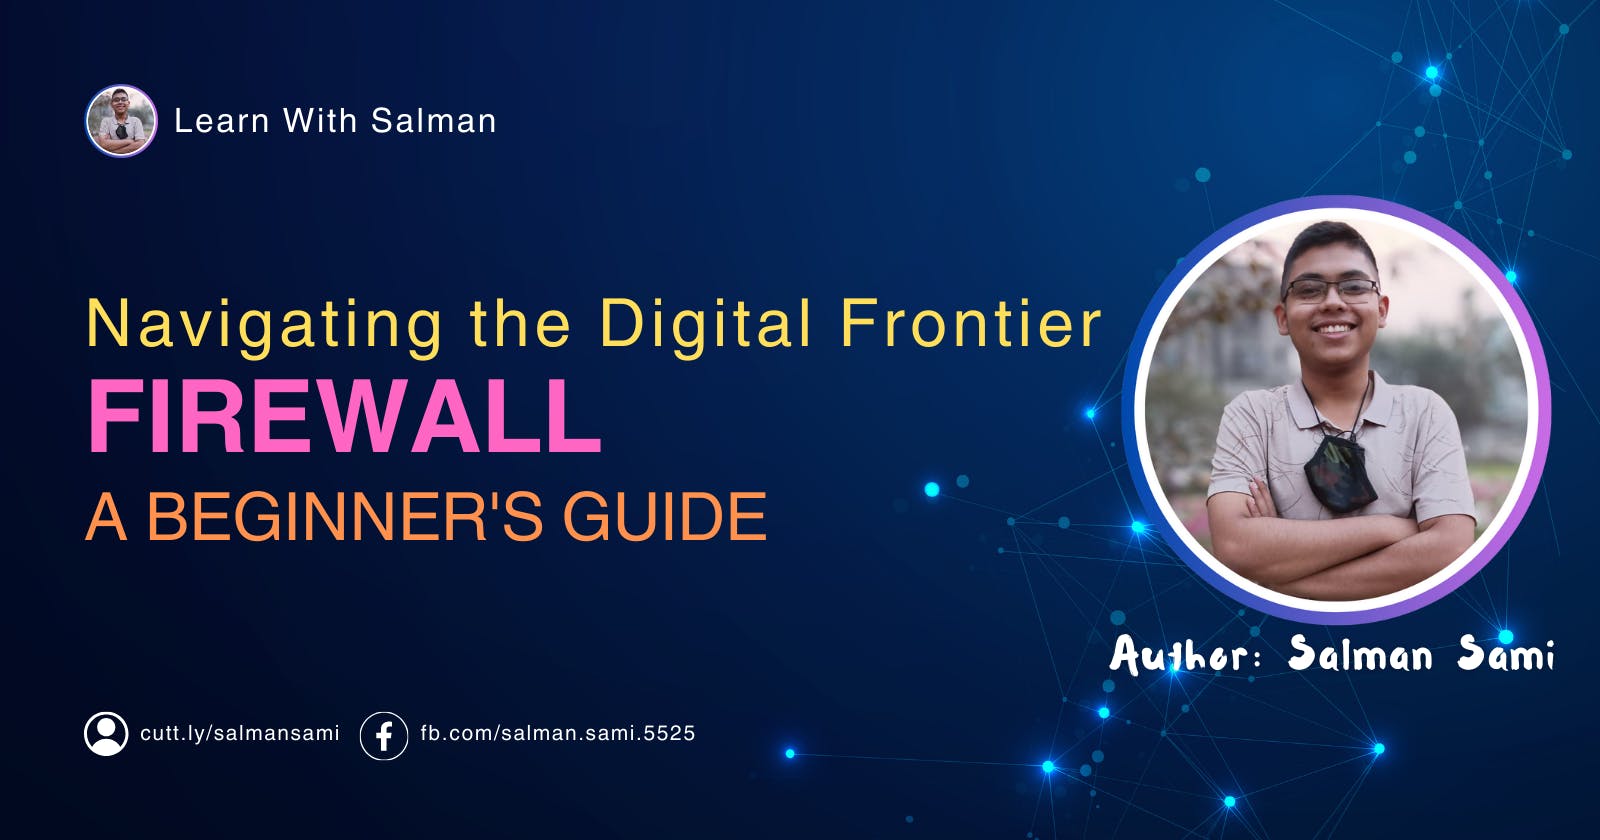 Navigating the Digital Frontier: A Beginner's Guide to Firewalls